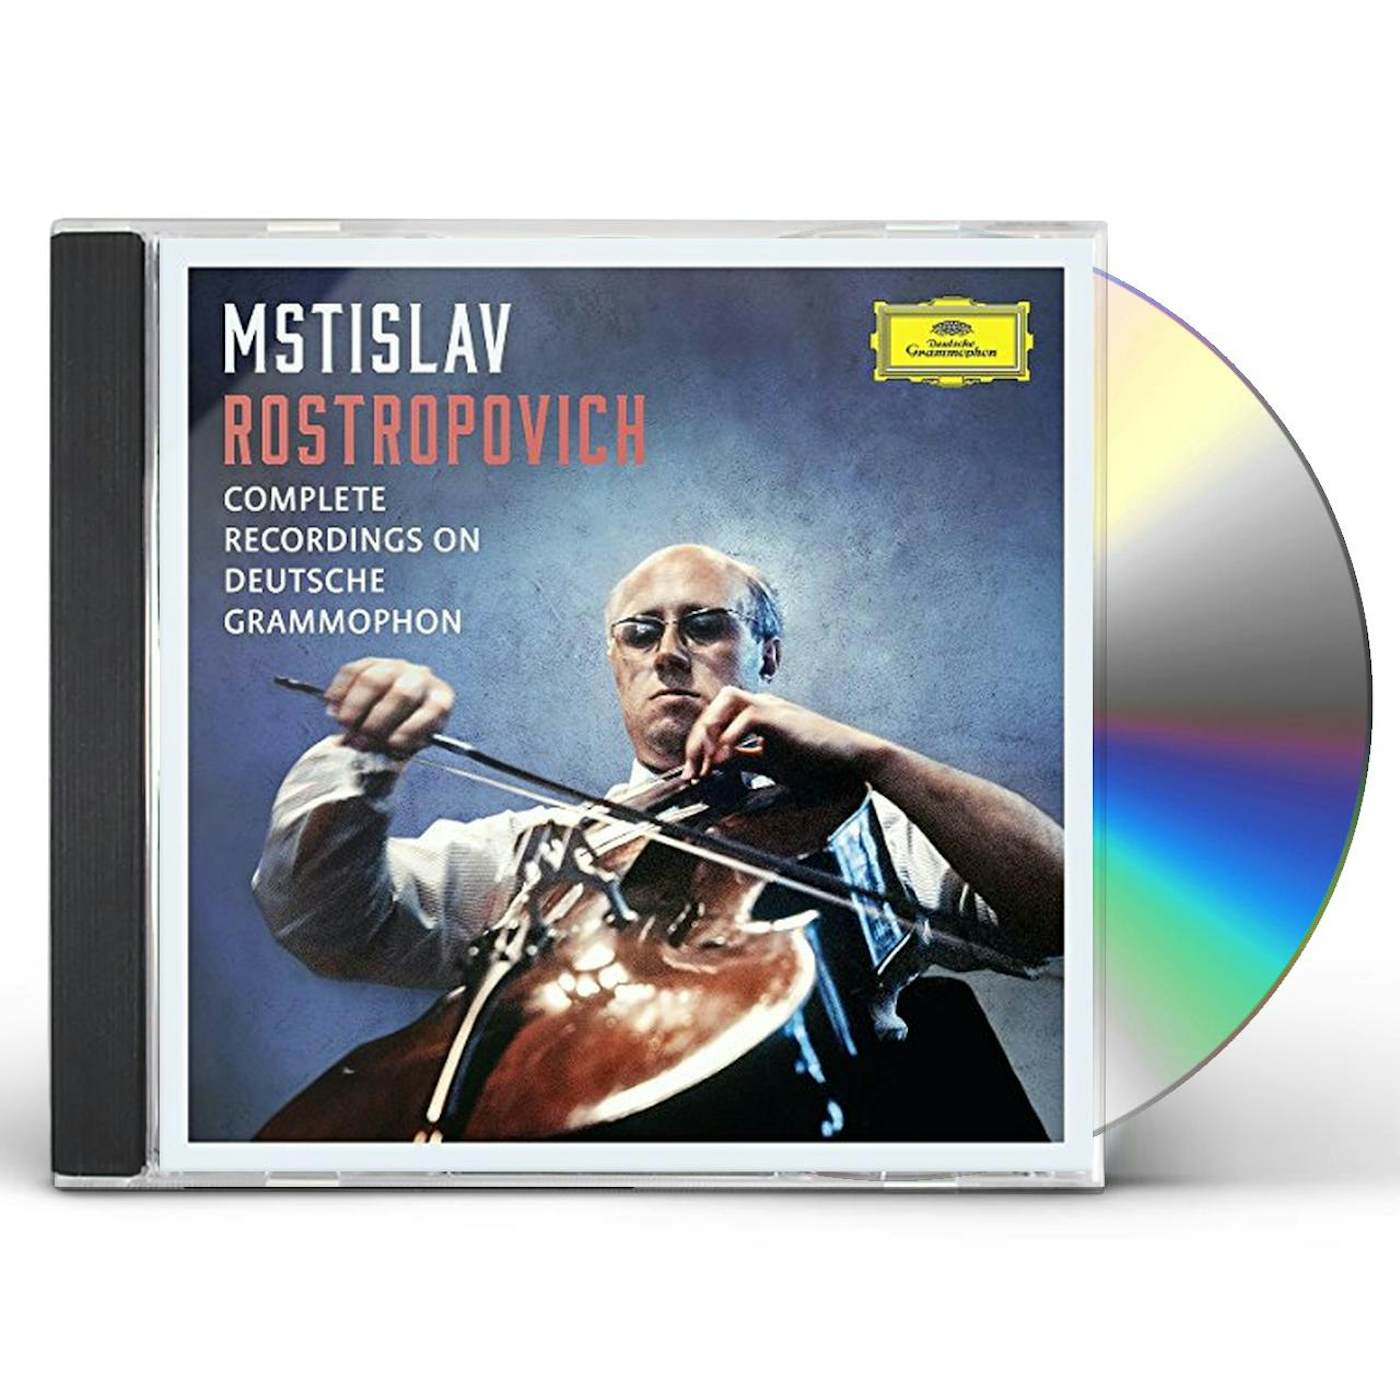 Mstislav Rostropovich COMPLETE RECORDINGS ON DEUTSCHE GRAMMOPHON CD